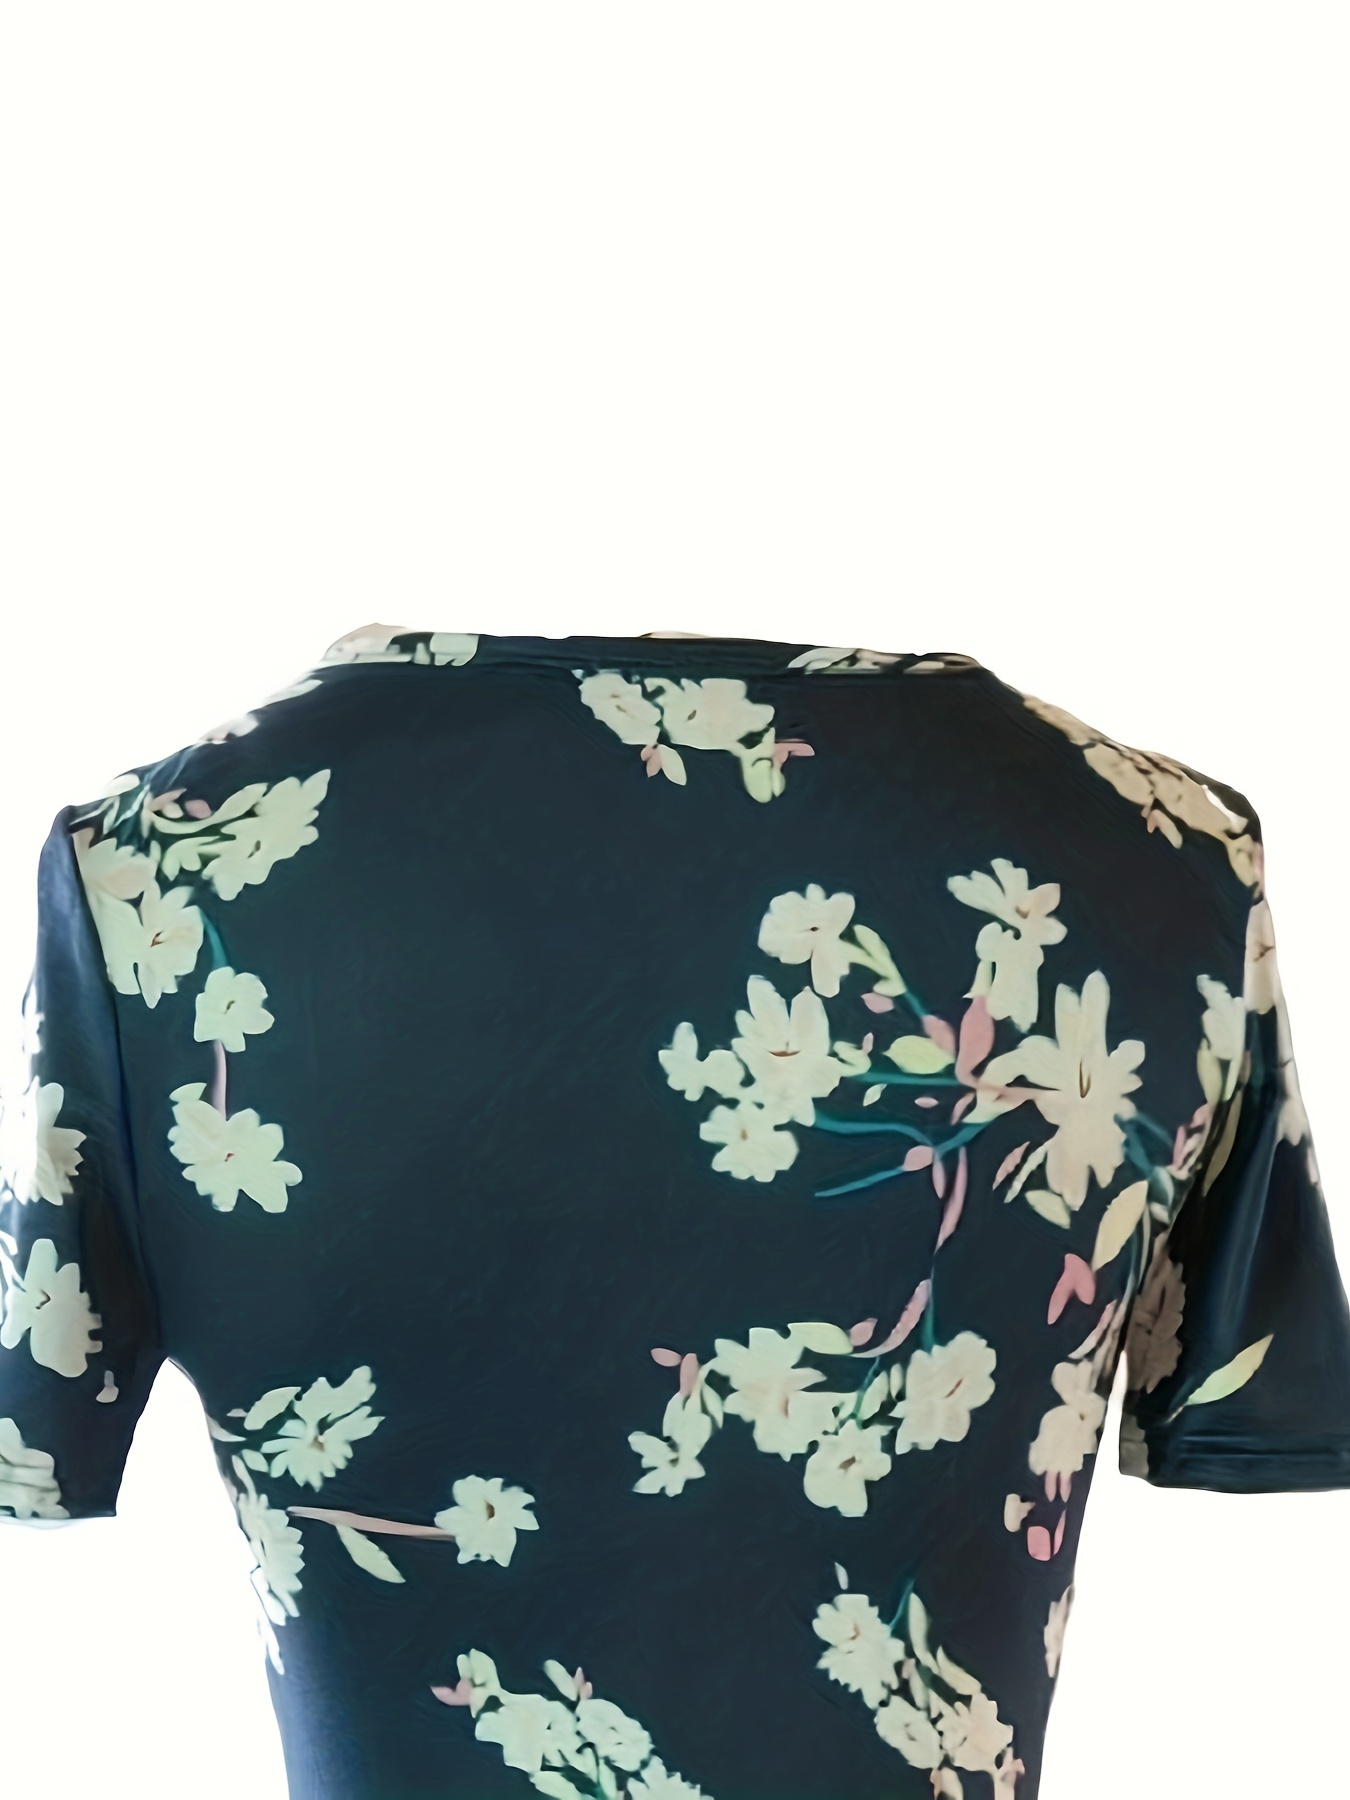 floral print crew neck dress elegant short sleeve dress for spring summer womens clothing